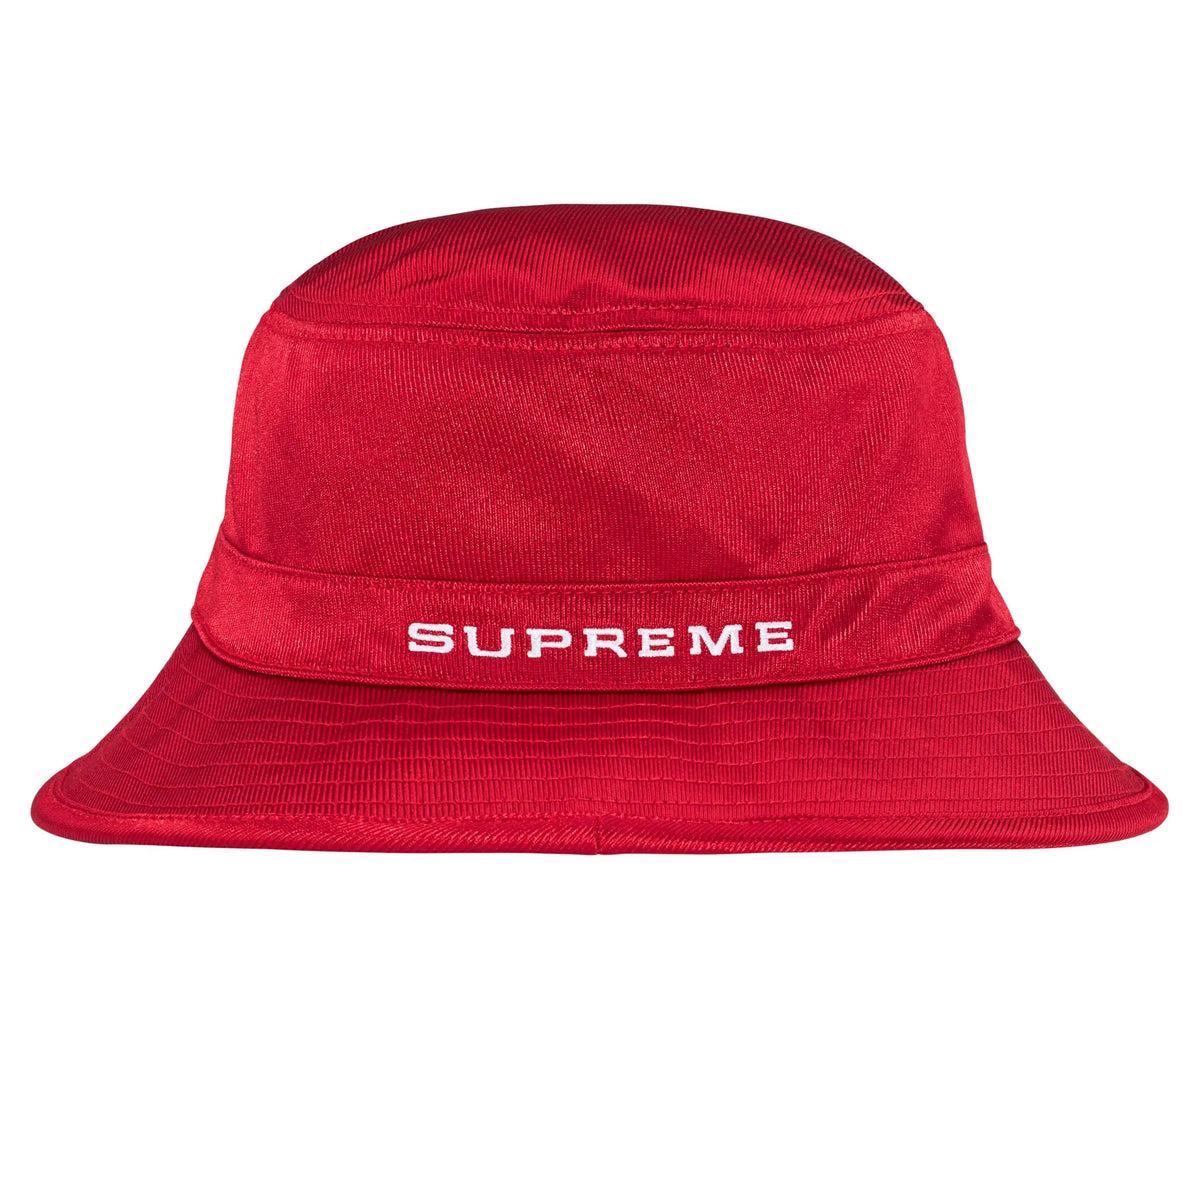 Nike x Supreme Dazzle Crusher Red Hat |